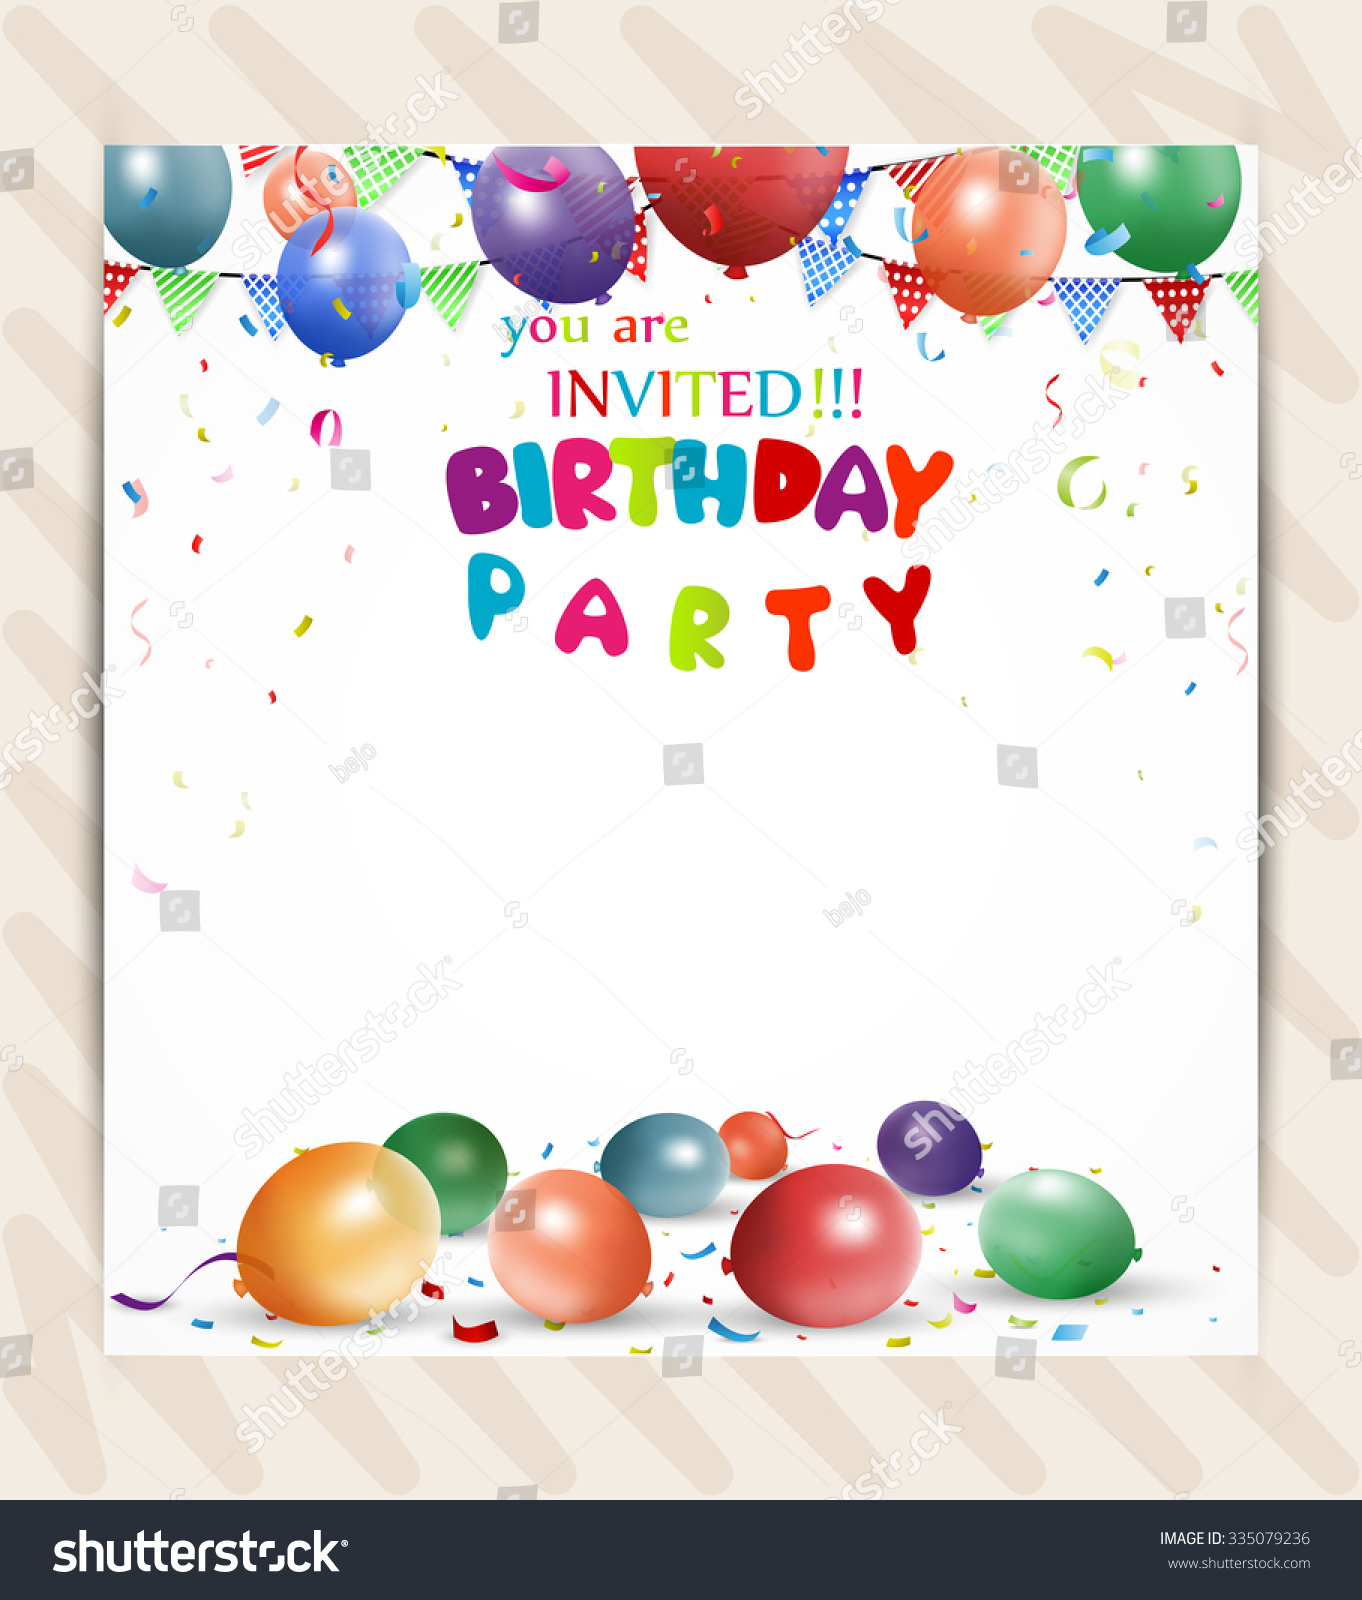 Birthday Invitation Card Stock Photo 335079236 : Shutterstock